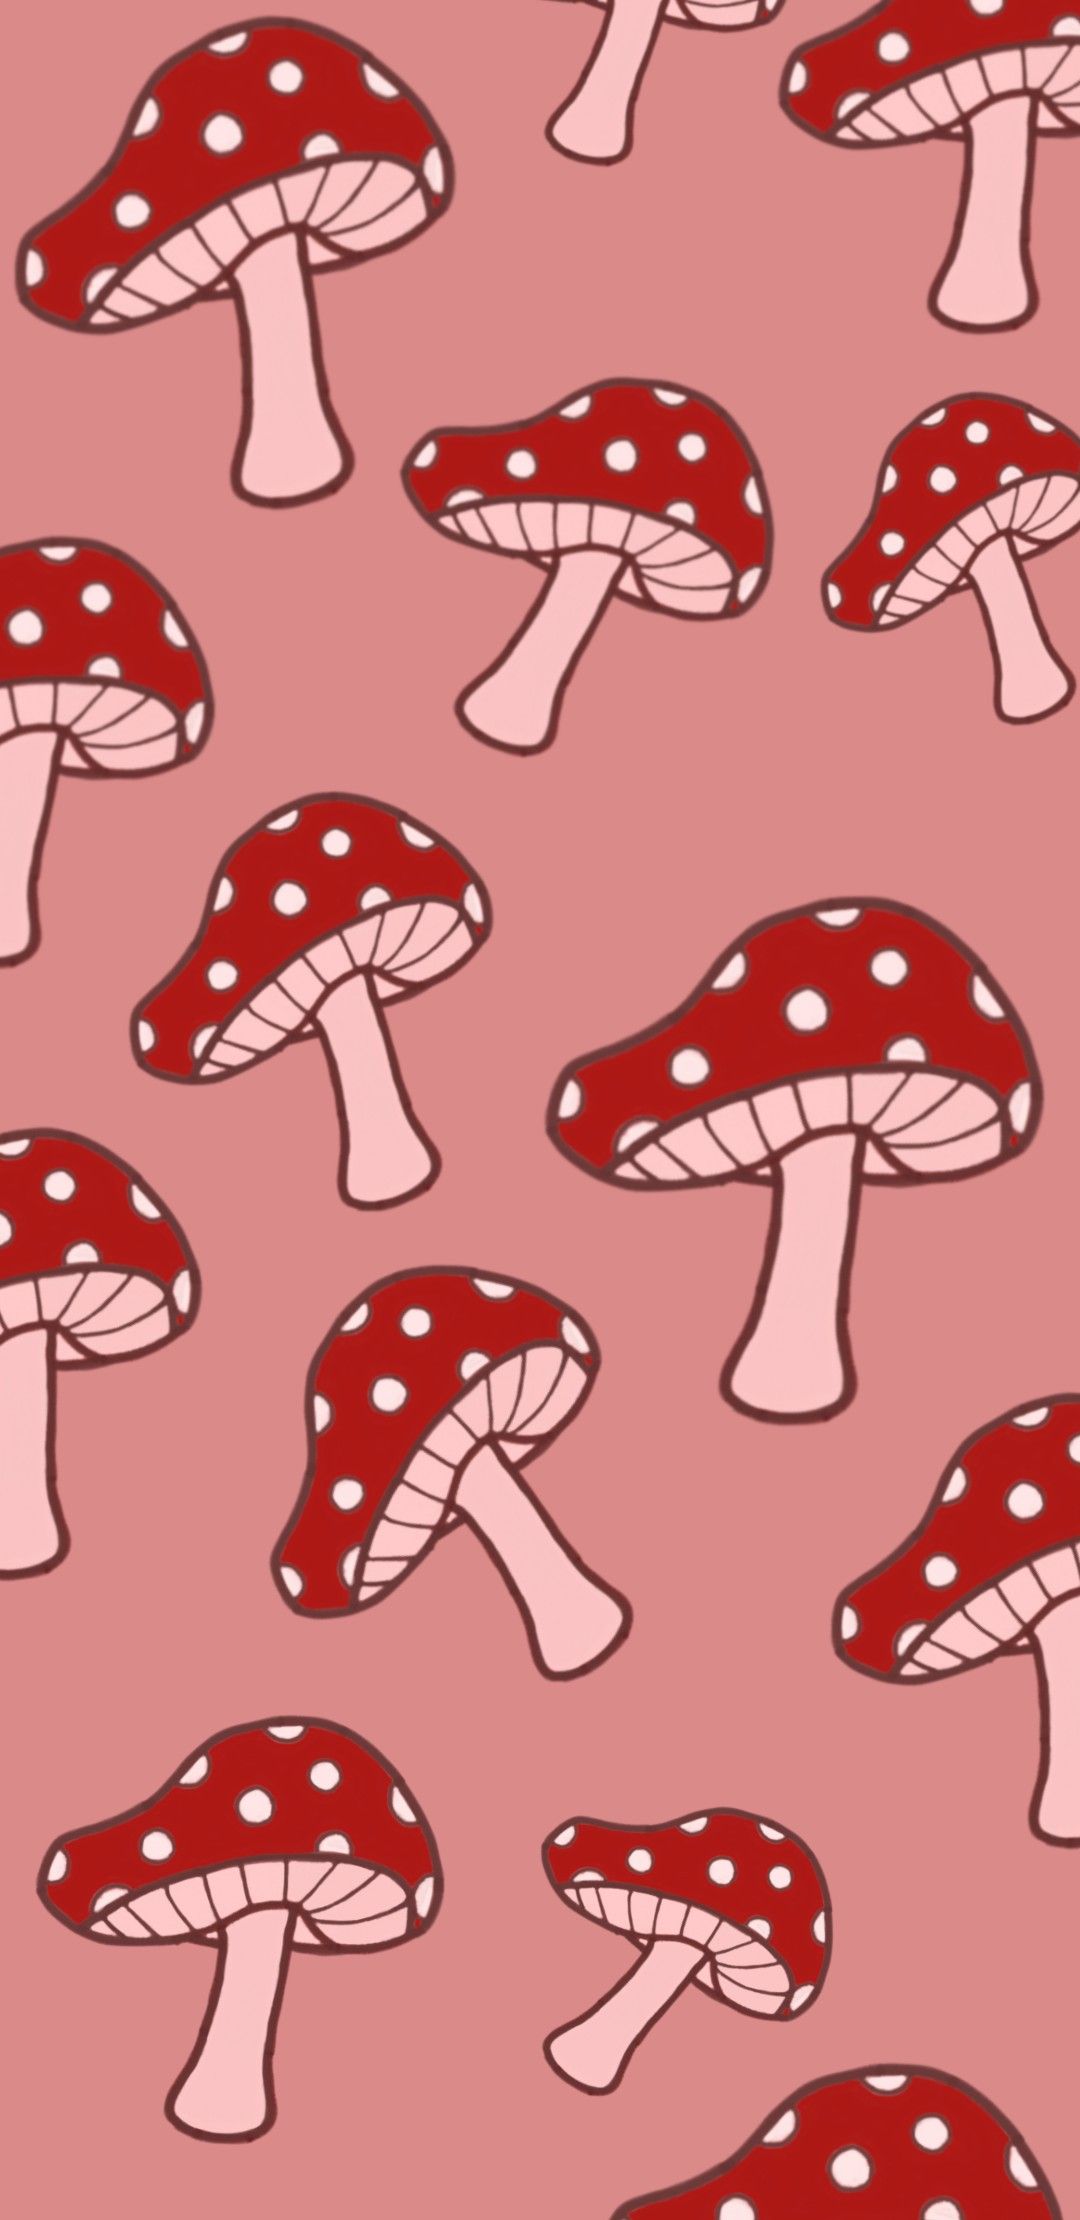 200+] Mushroom Wallpapers | Wallpapers.com